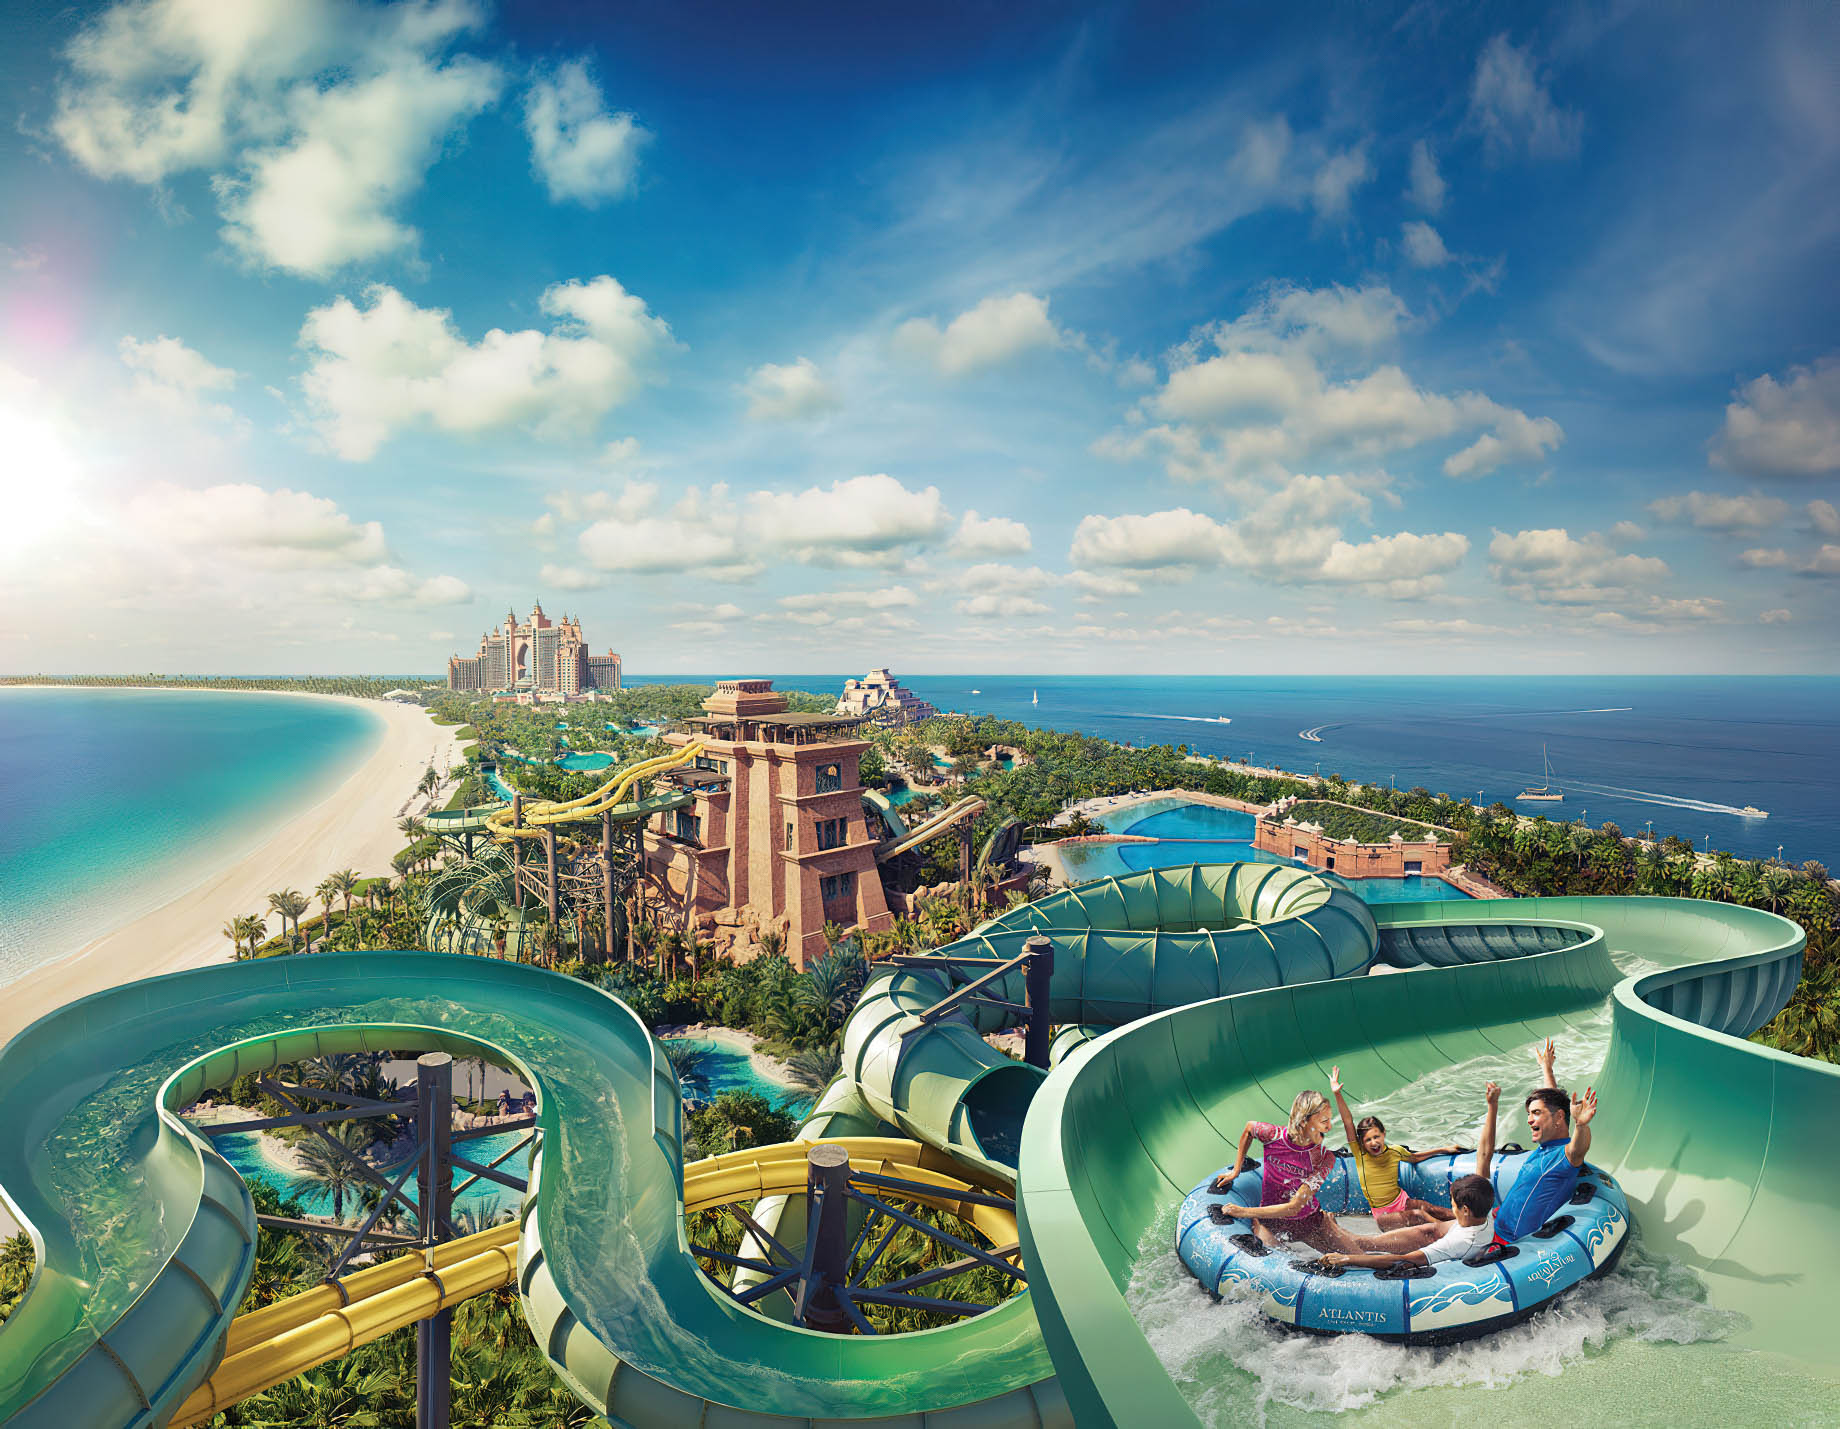 Atlantis The Palm Resort – Crescent Rd, Dubai, UAE – Aquaventure Waterpark Water Slide